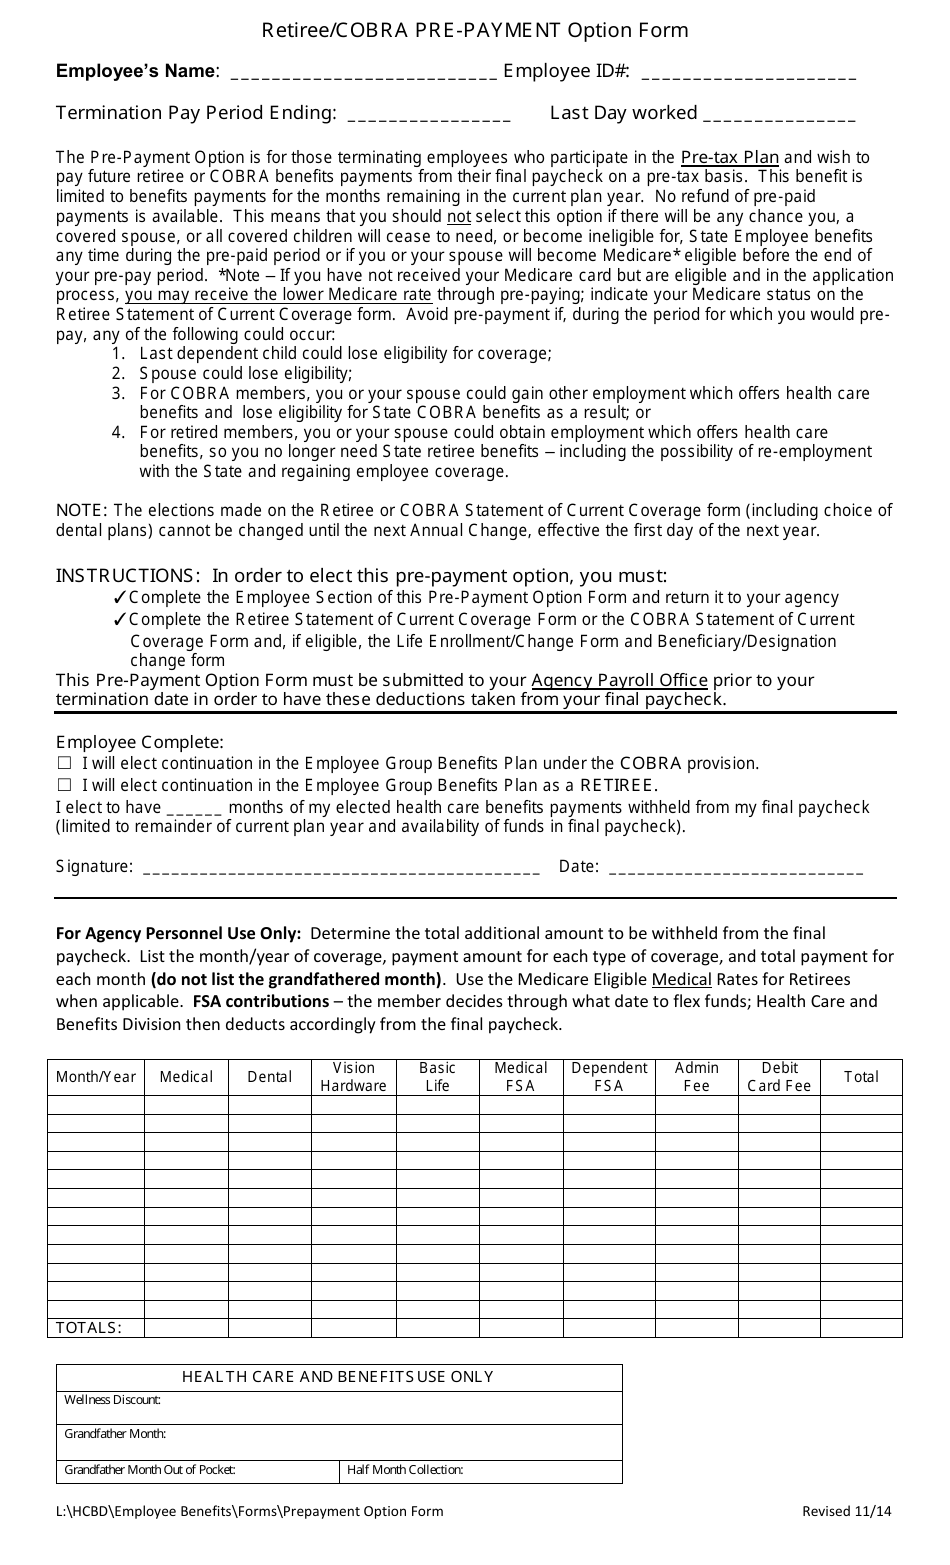 Retiree/Cobra Pre-payment Option Form, Page 1